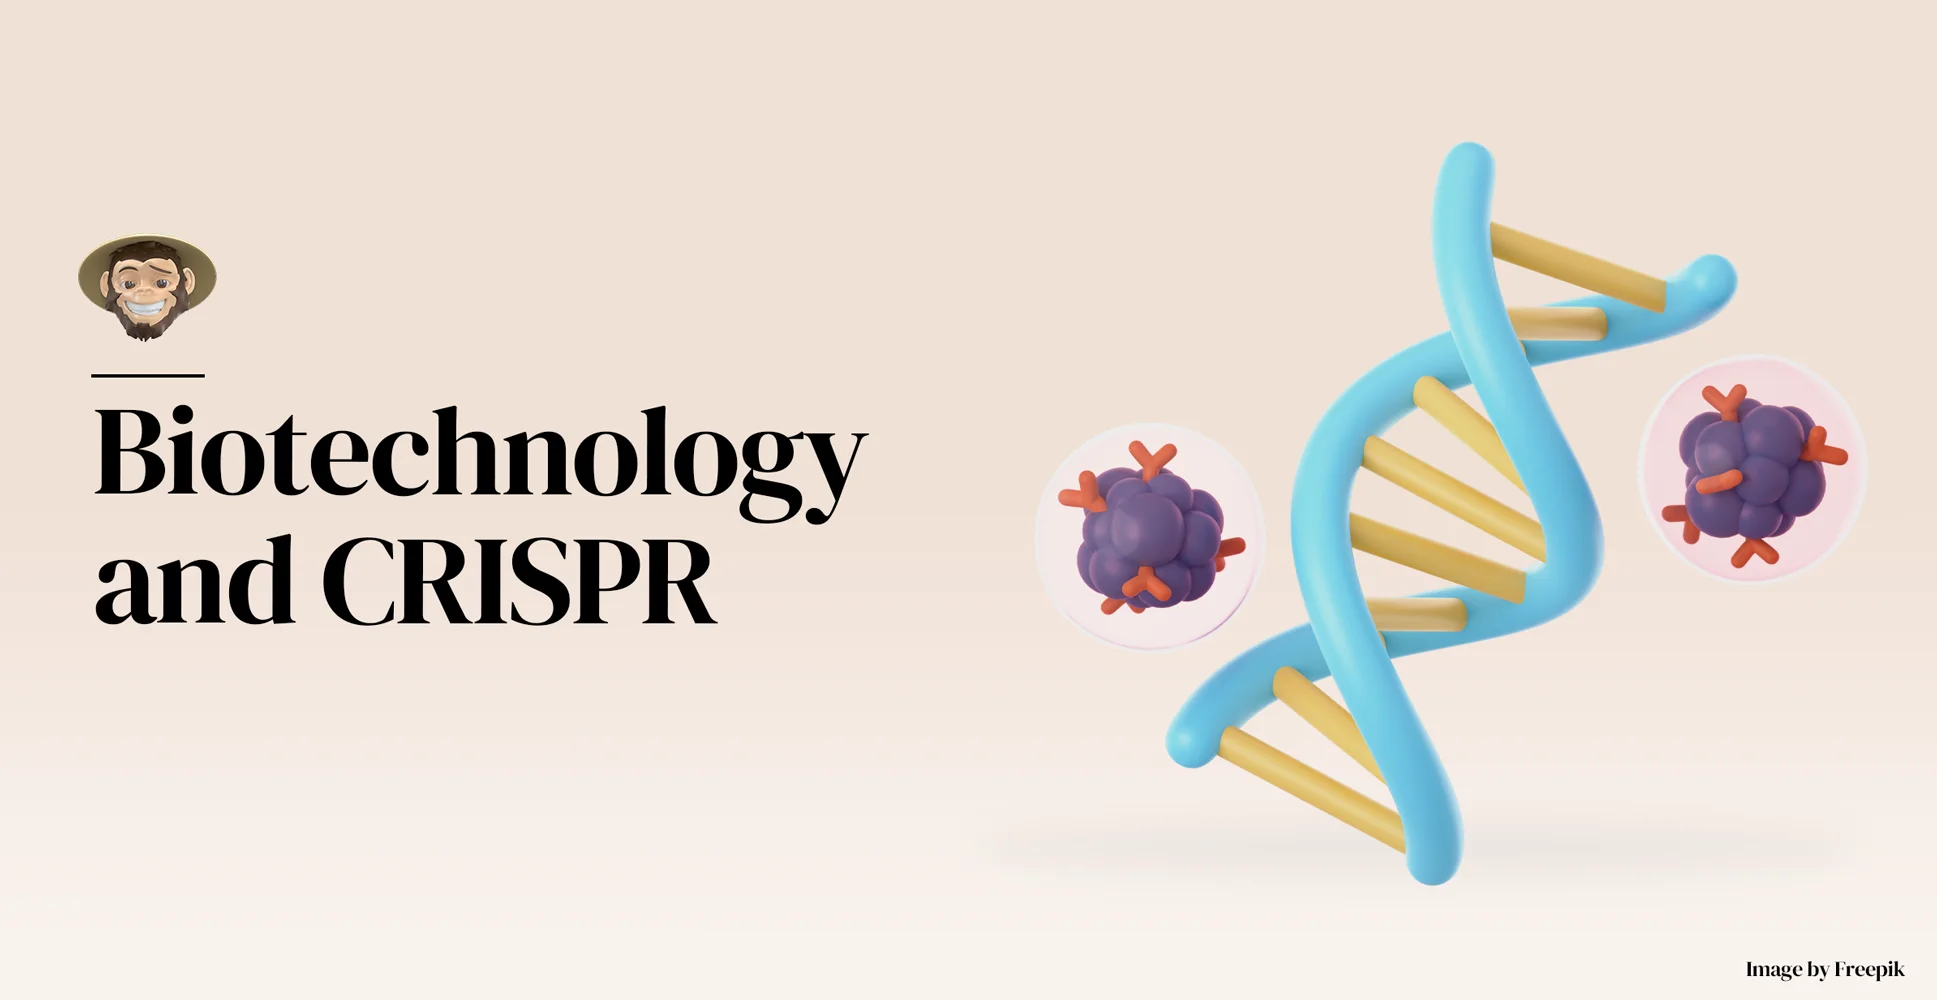 Biotechnology and CRISPR